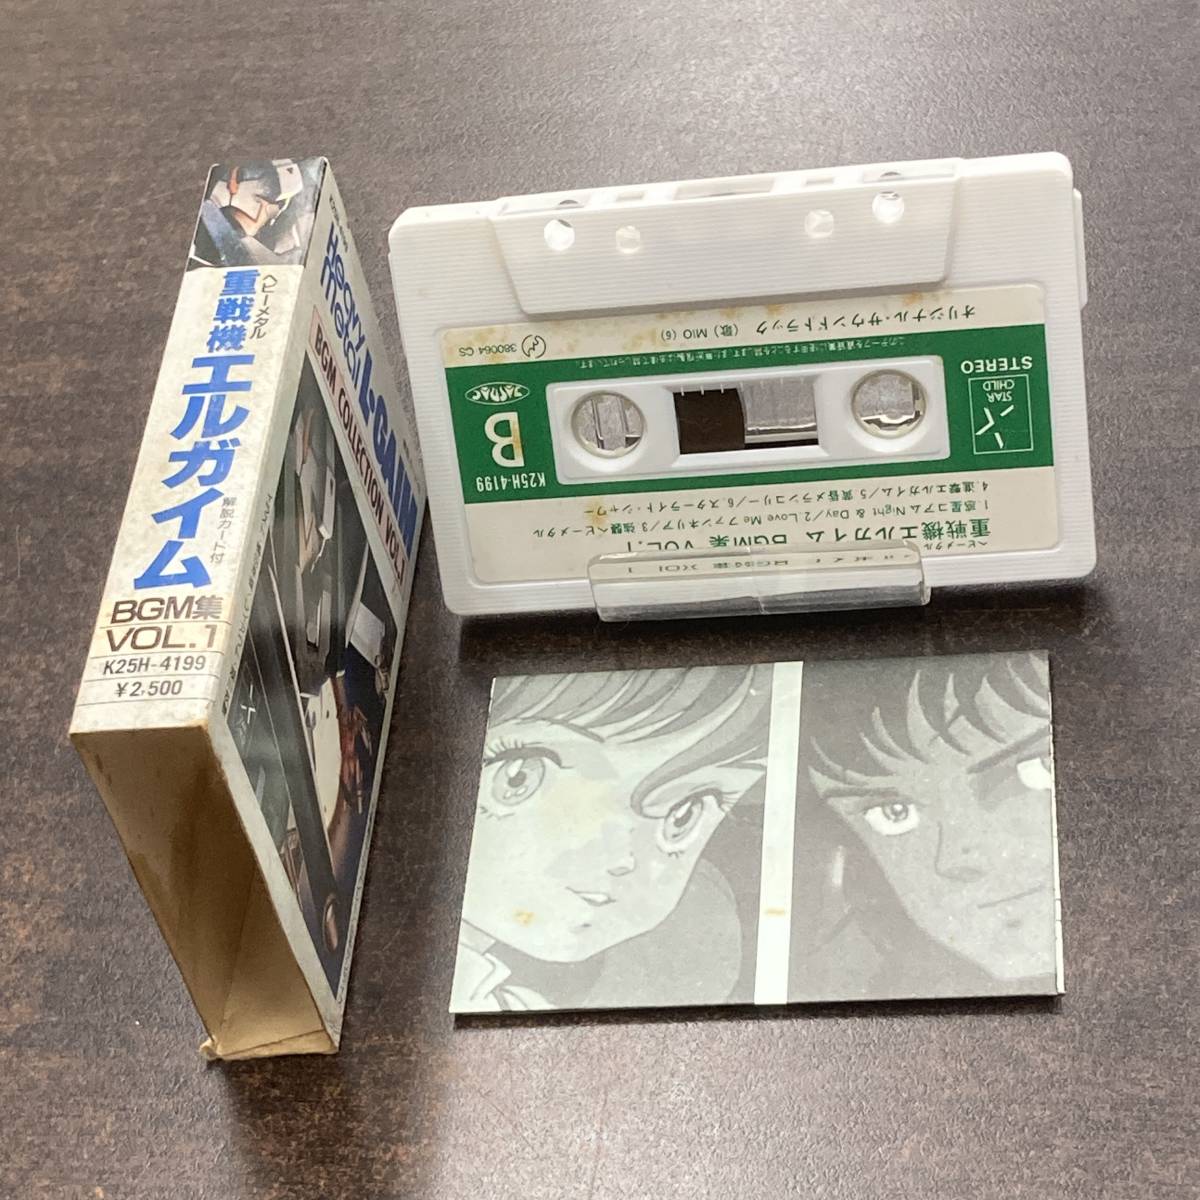 1362M 重戦機エルガイム BGM COLLECTION VOL1 カセットテープ / Heavy Metal L・GAIM Anime Cassette Tape_画像3